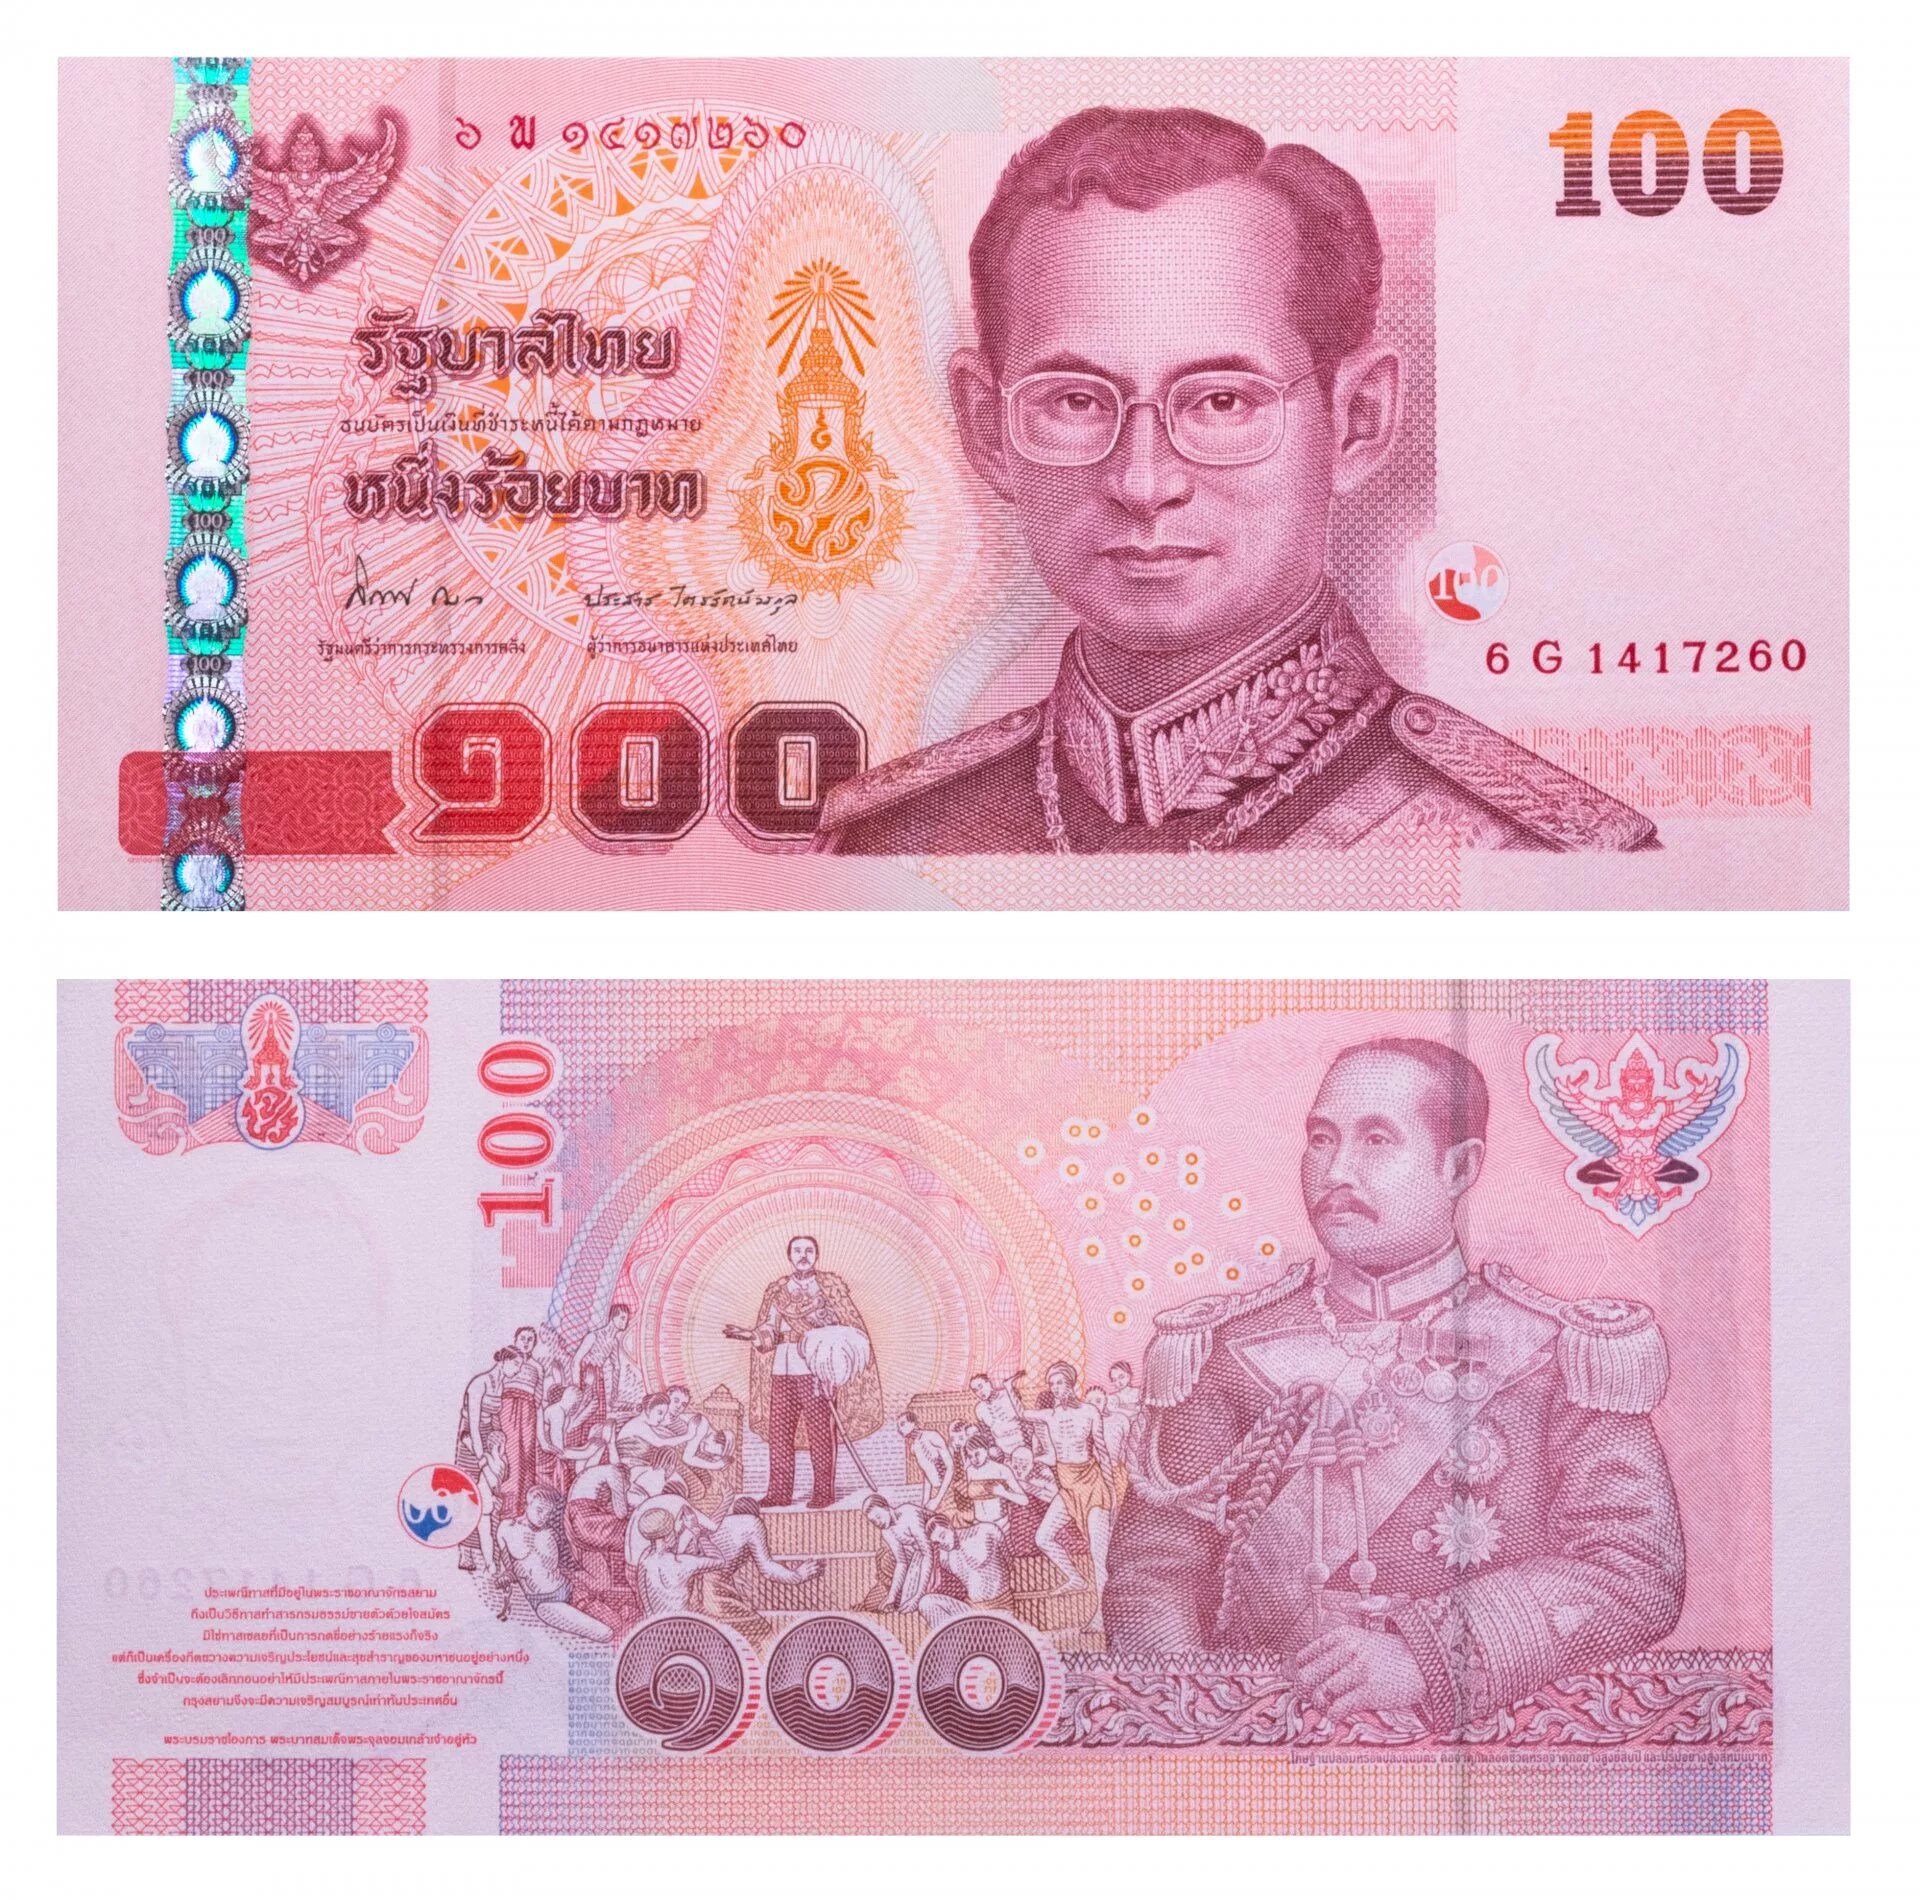 Купюра Тайланда 100 бат. Батт 100 купюра бат. Тайская купюра 100 бат. Банкноты Таиланда 100 бат в рублях. 200 батов в рублях